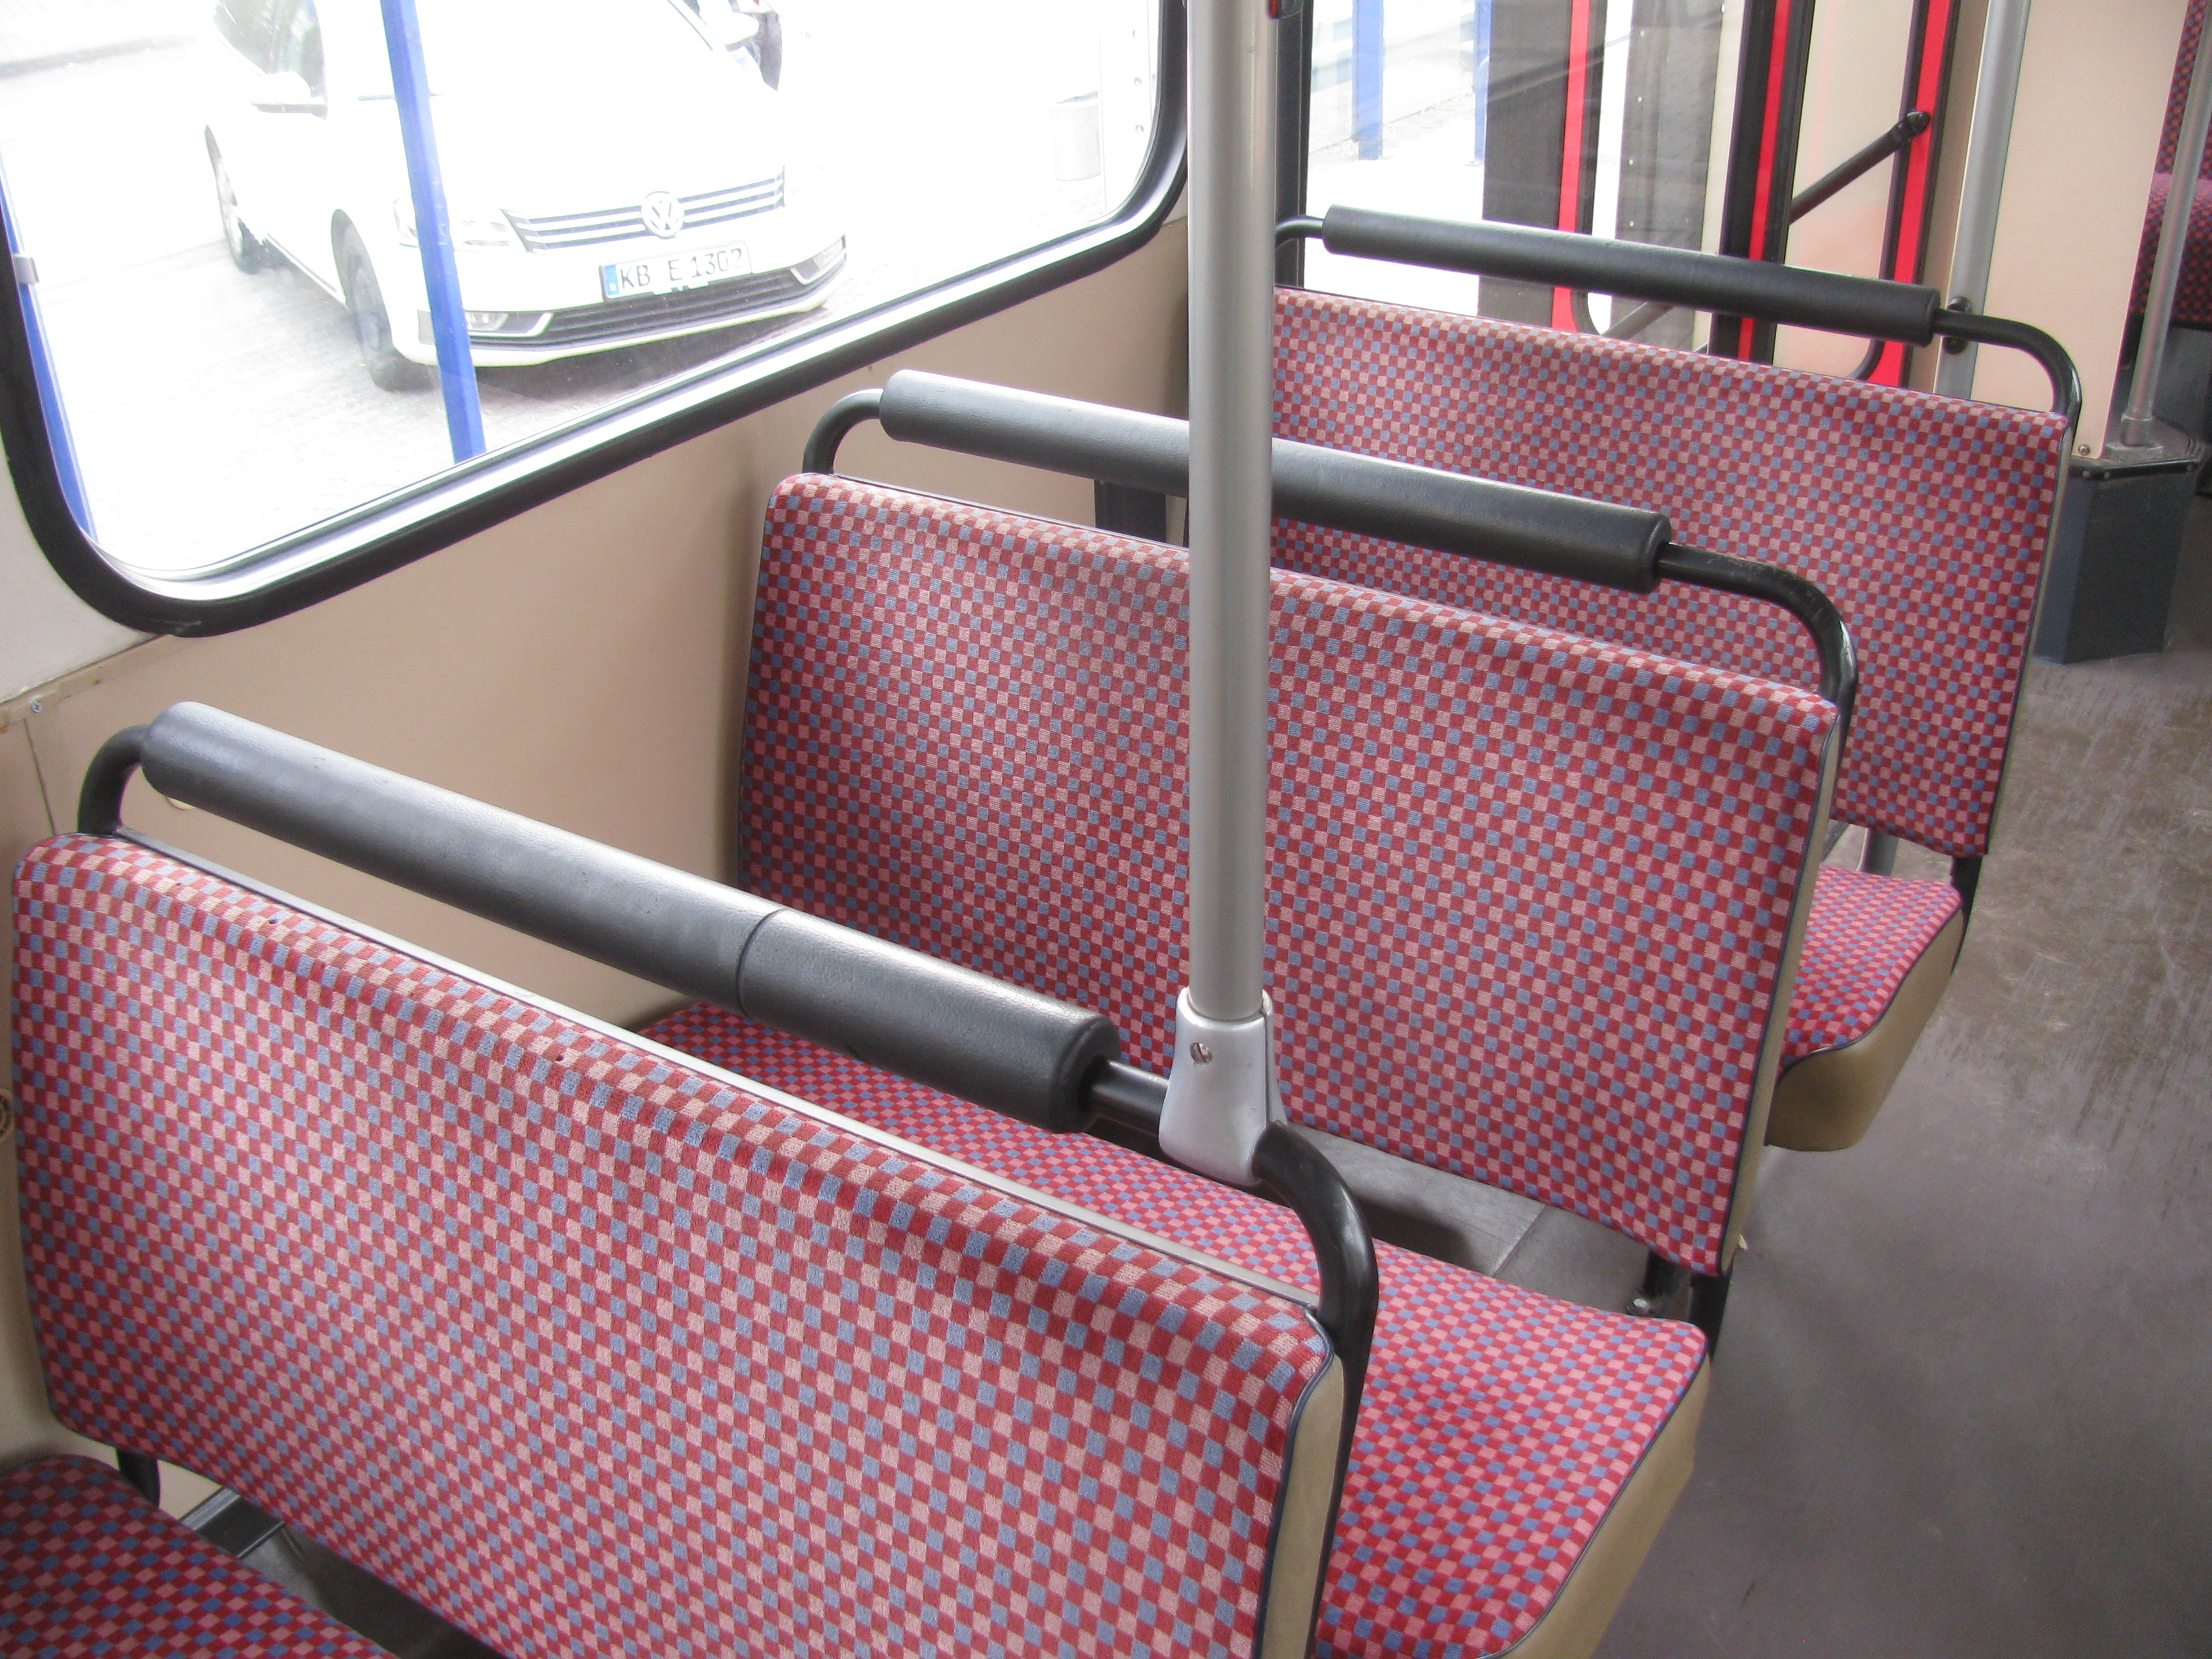 Bus seats. Автобус Heuliez o305 в фото внутри салона. Seats on the Bus.